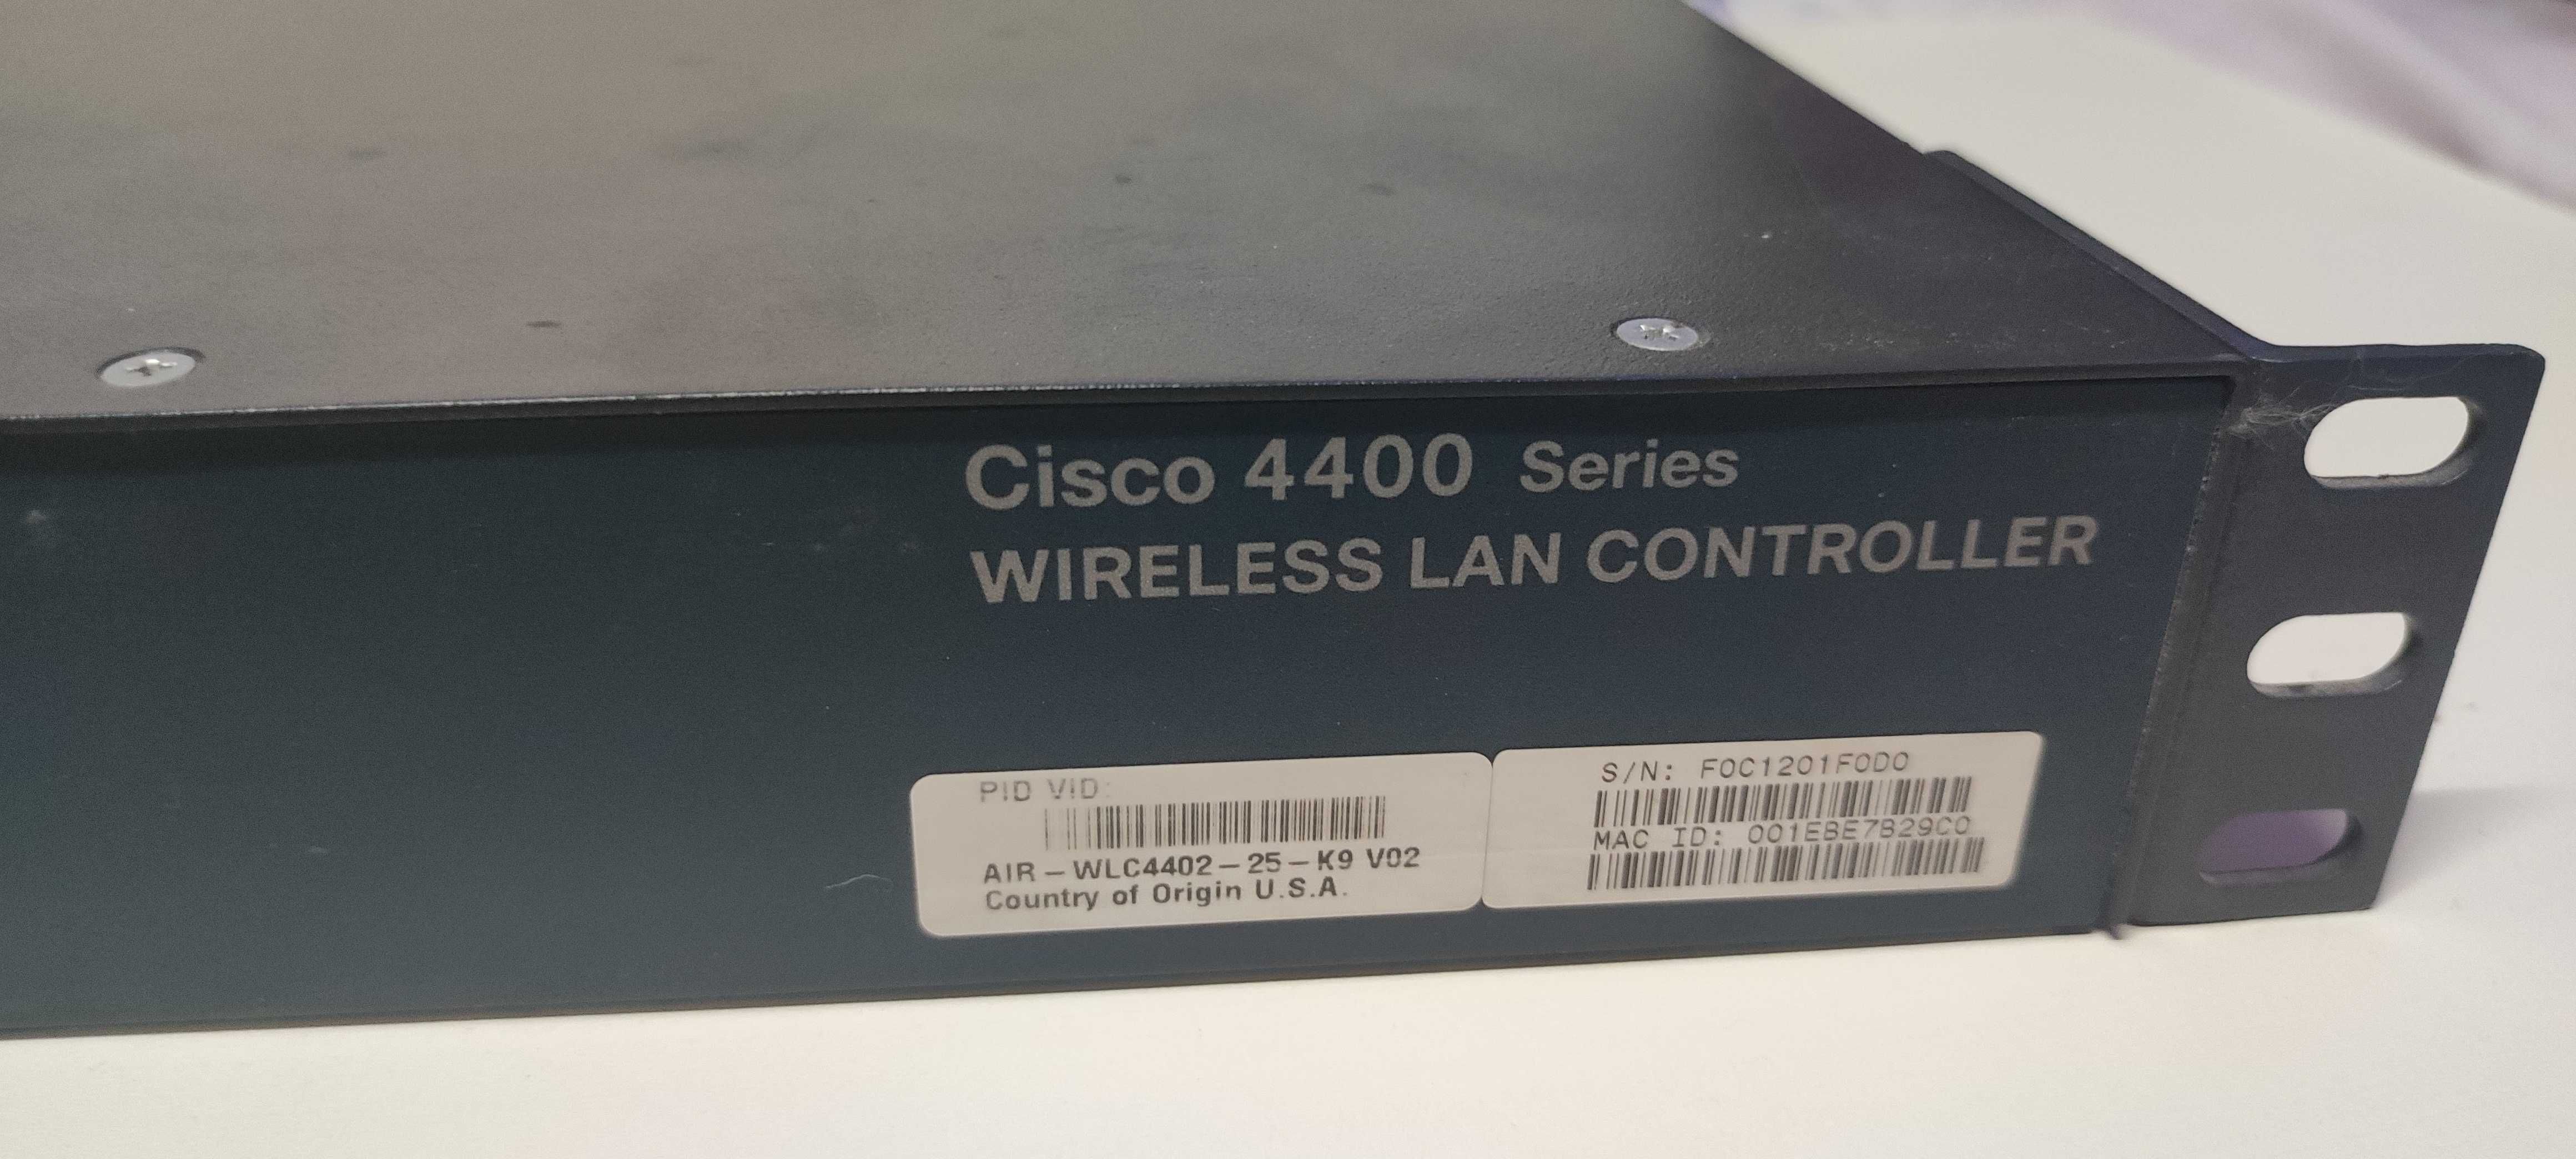 Cisco AIR-WLC4402-25-K9